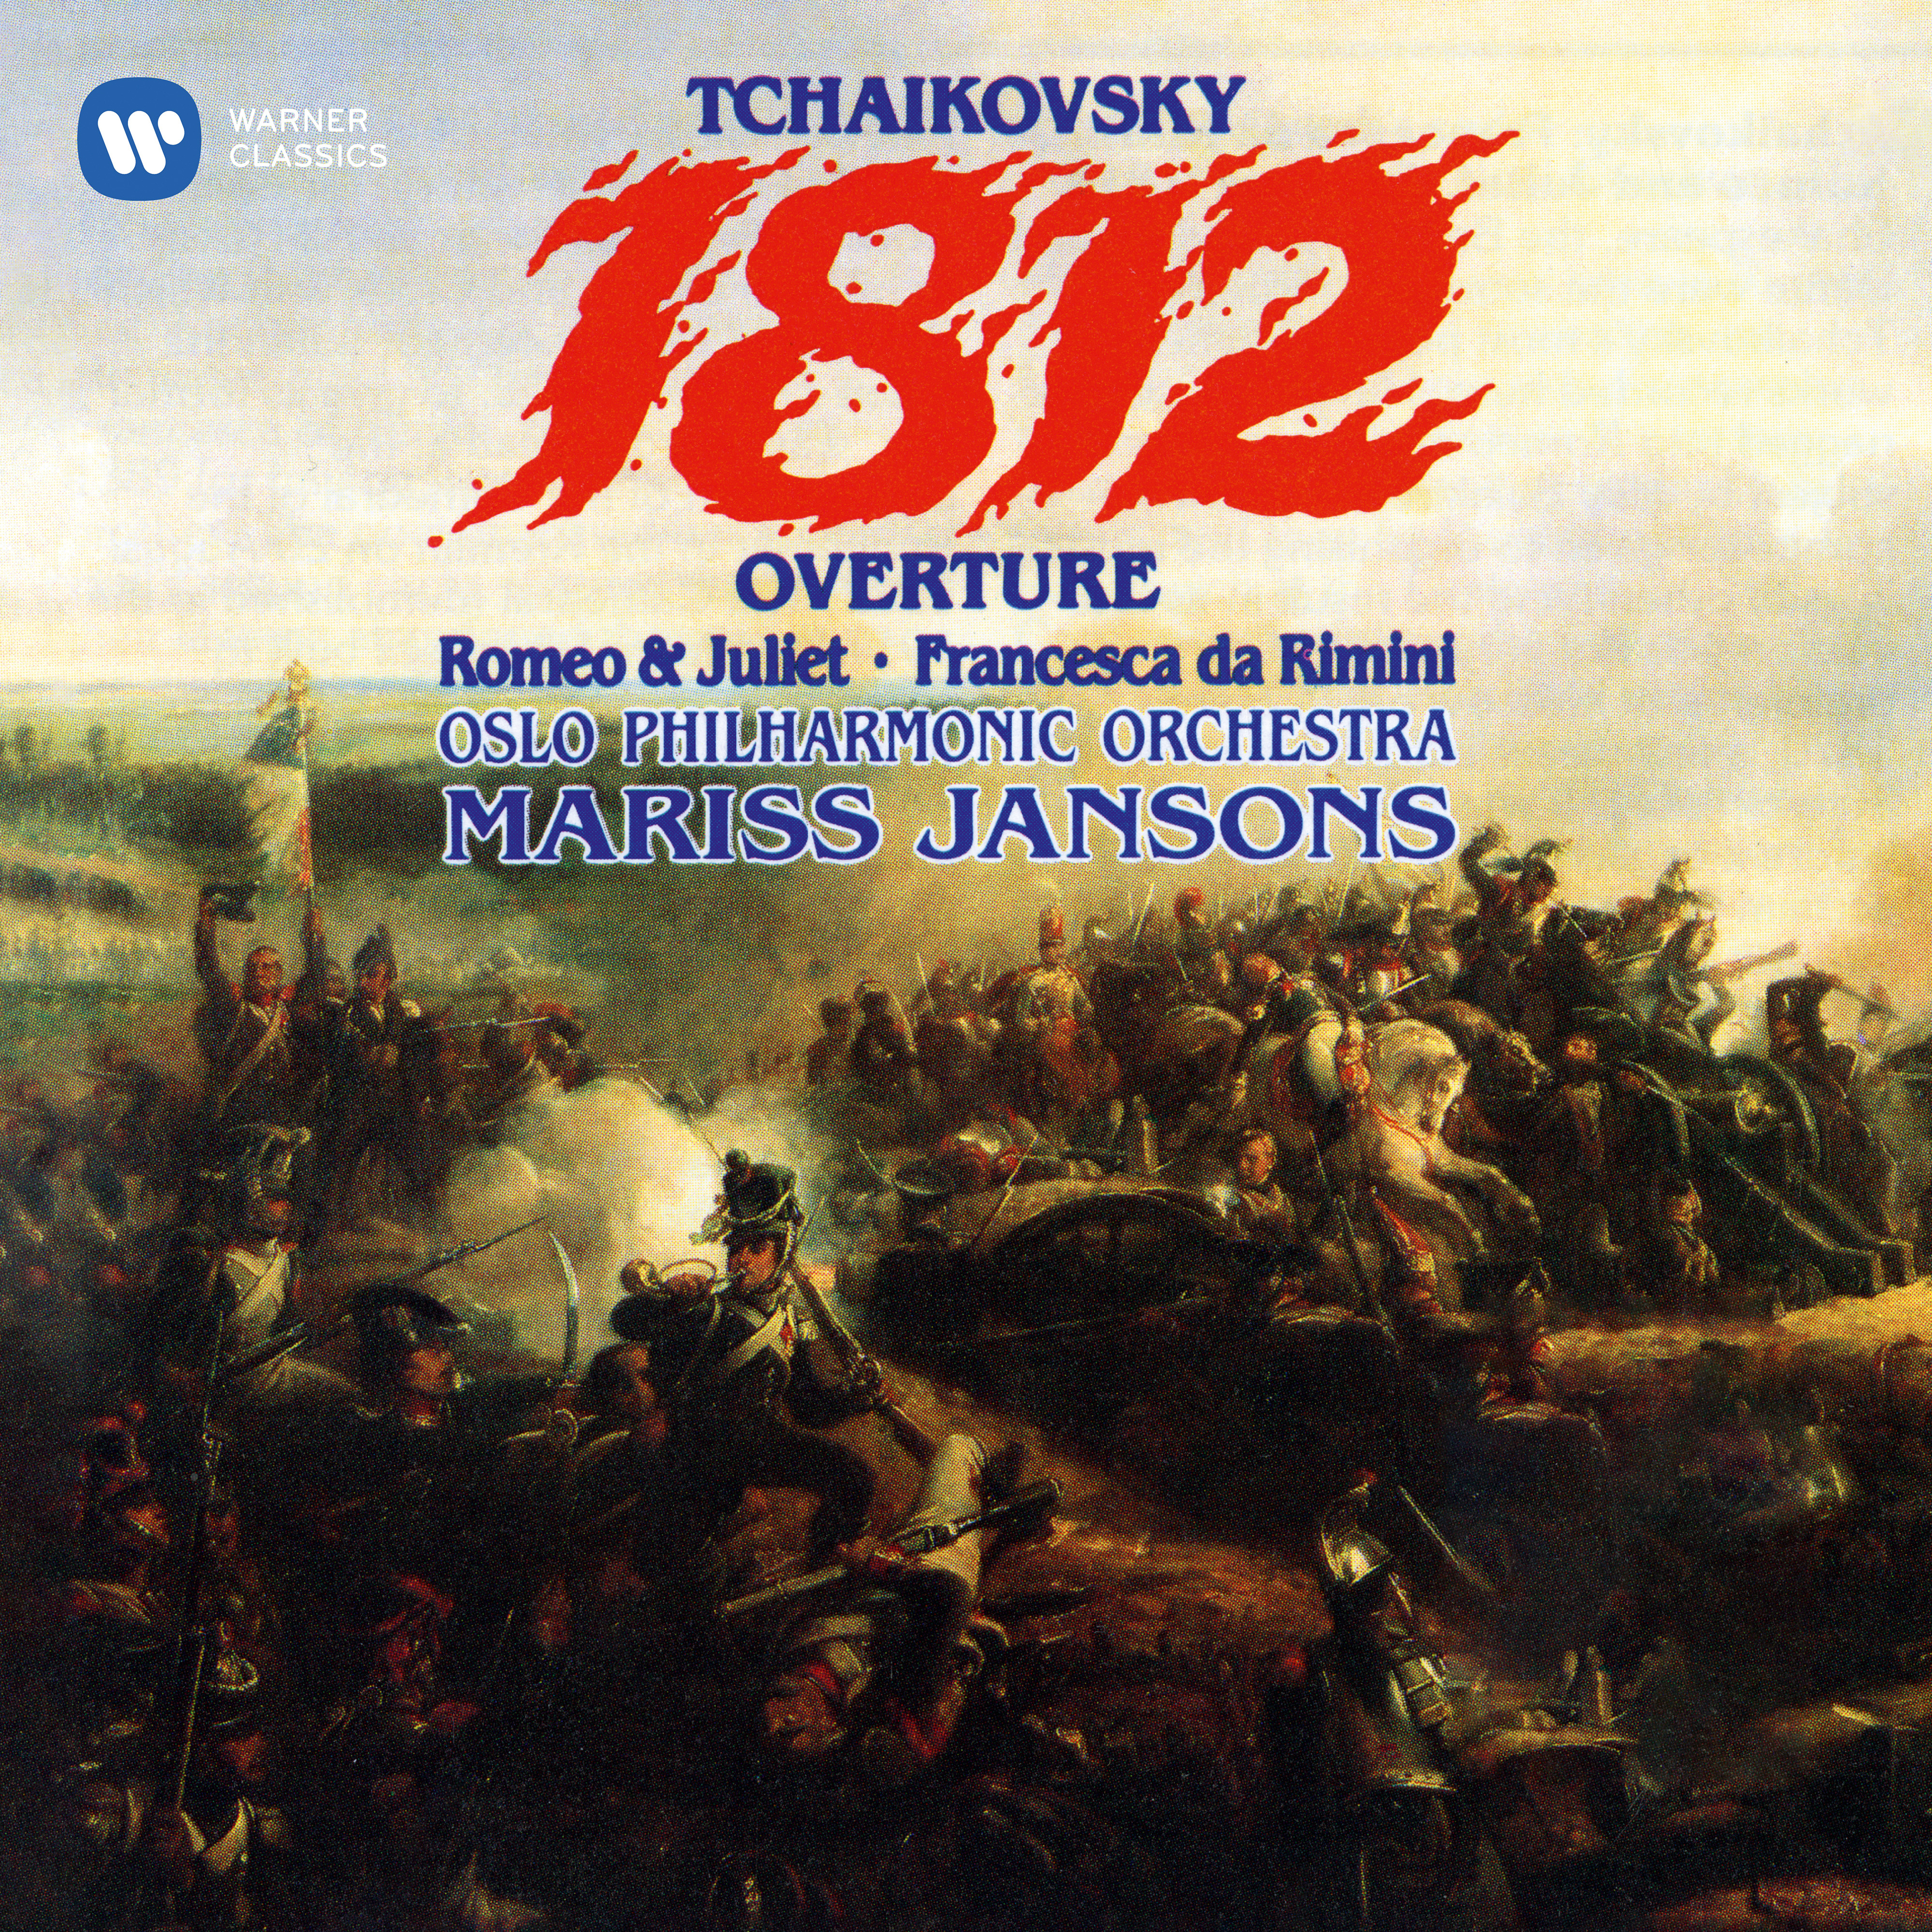 Tchaikovsky 1812 Overture Romeo And Juliet Francesca Da Rimini Warner Classics